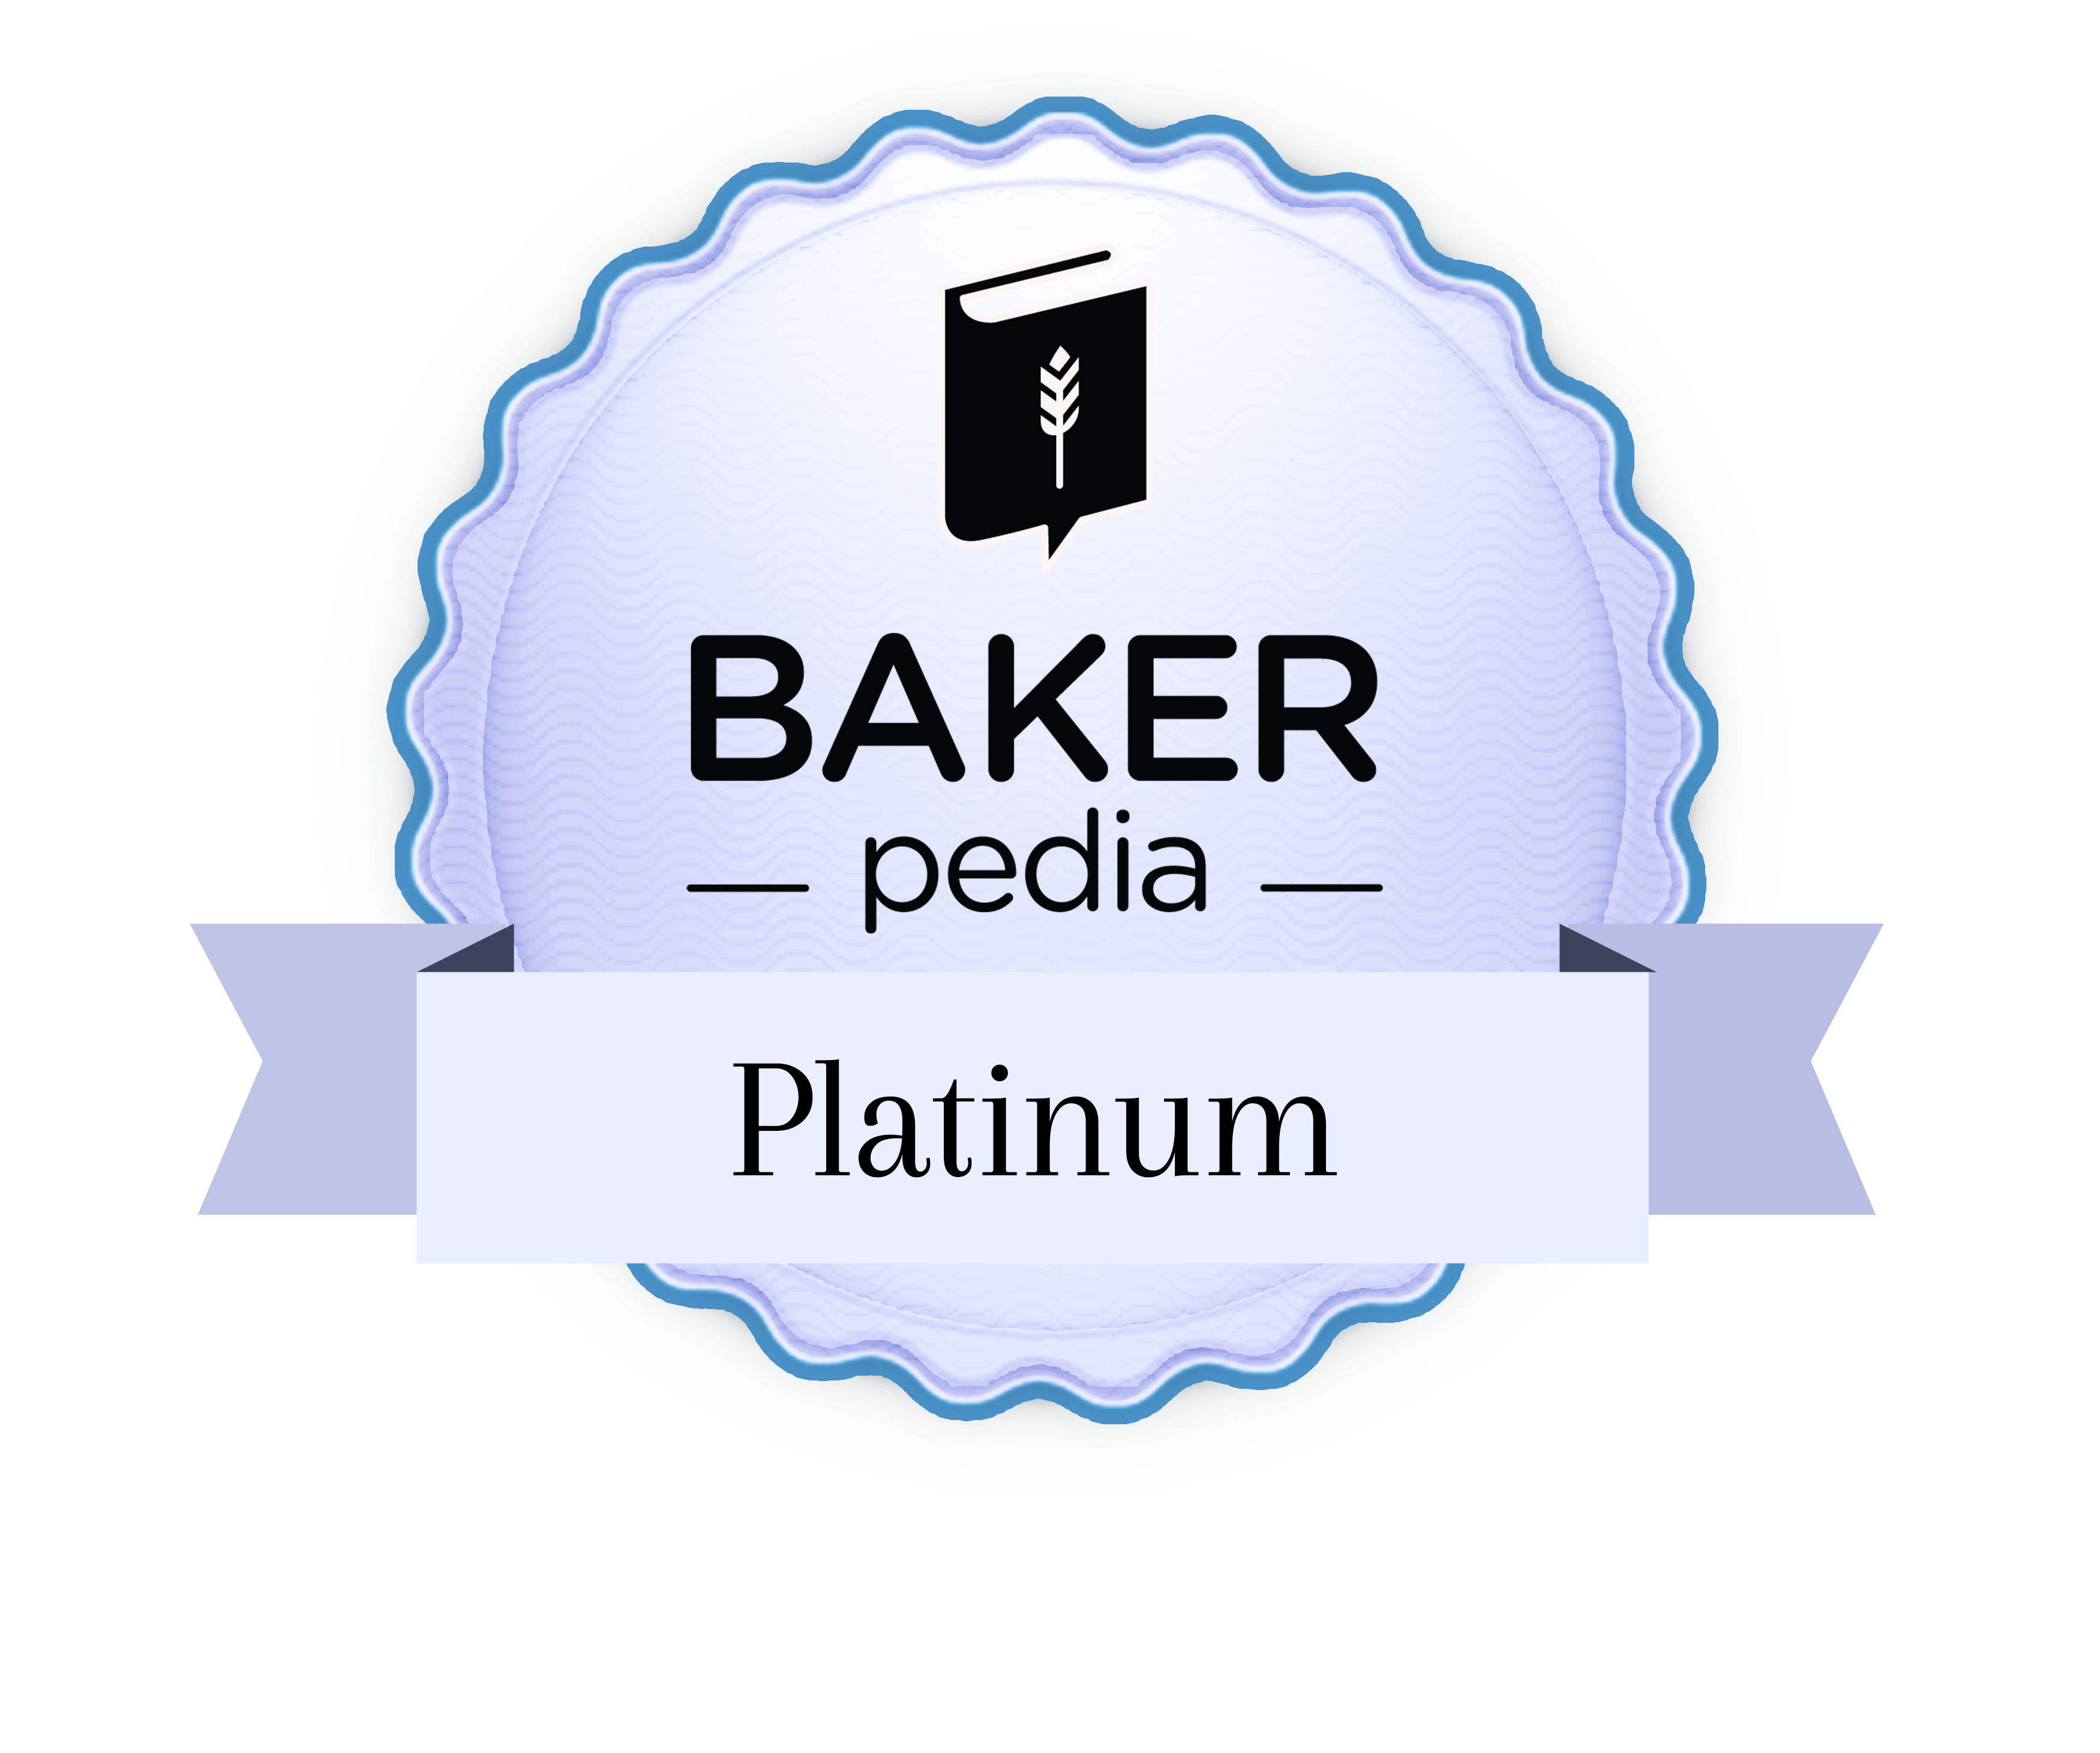 BAKERpedia Platinum Sponsor